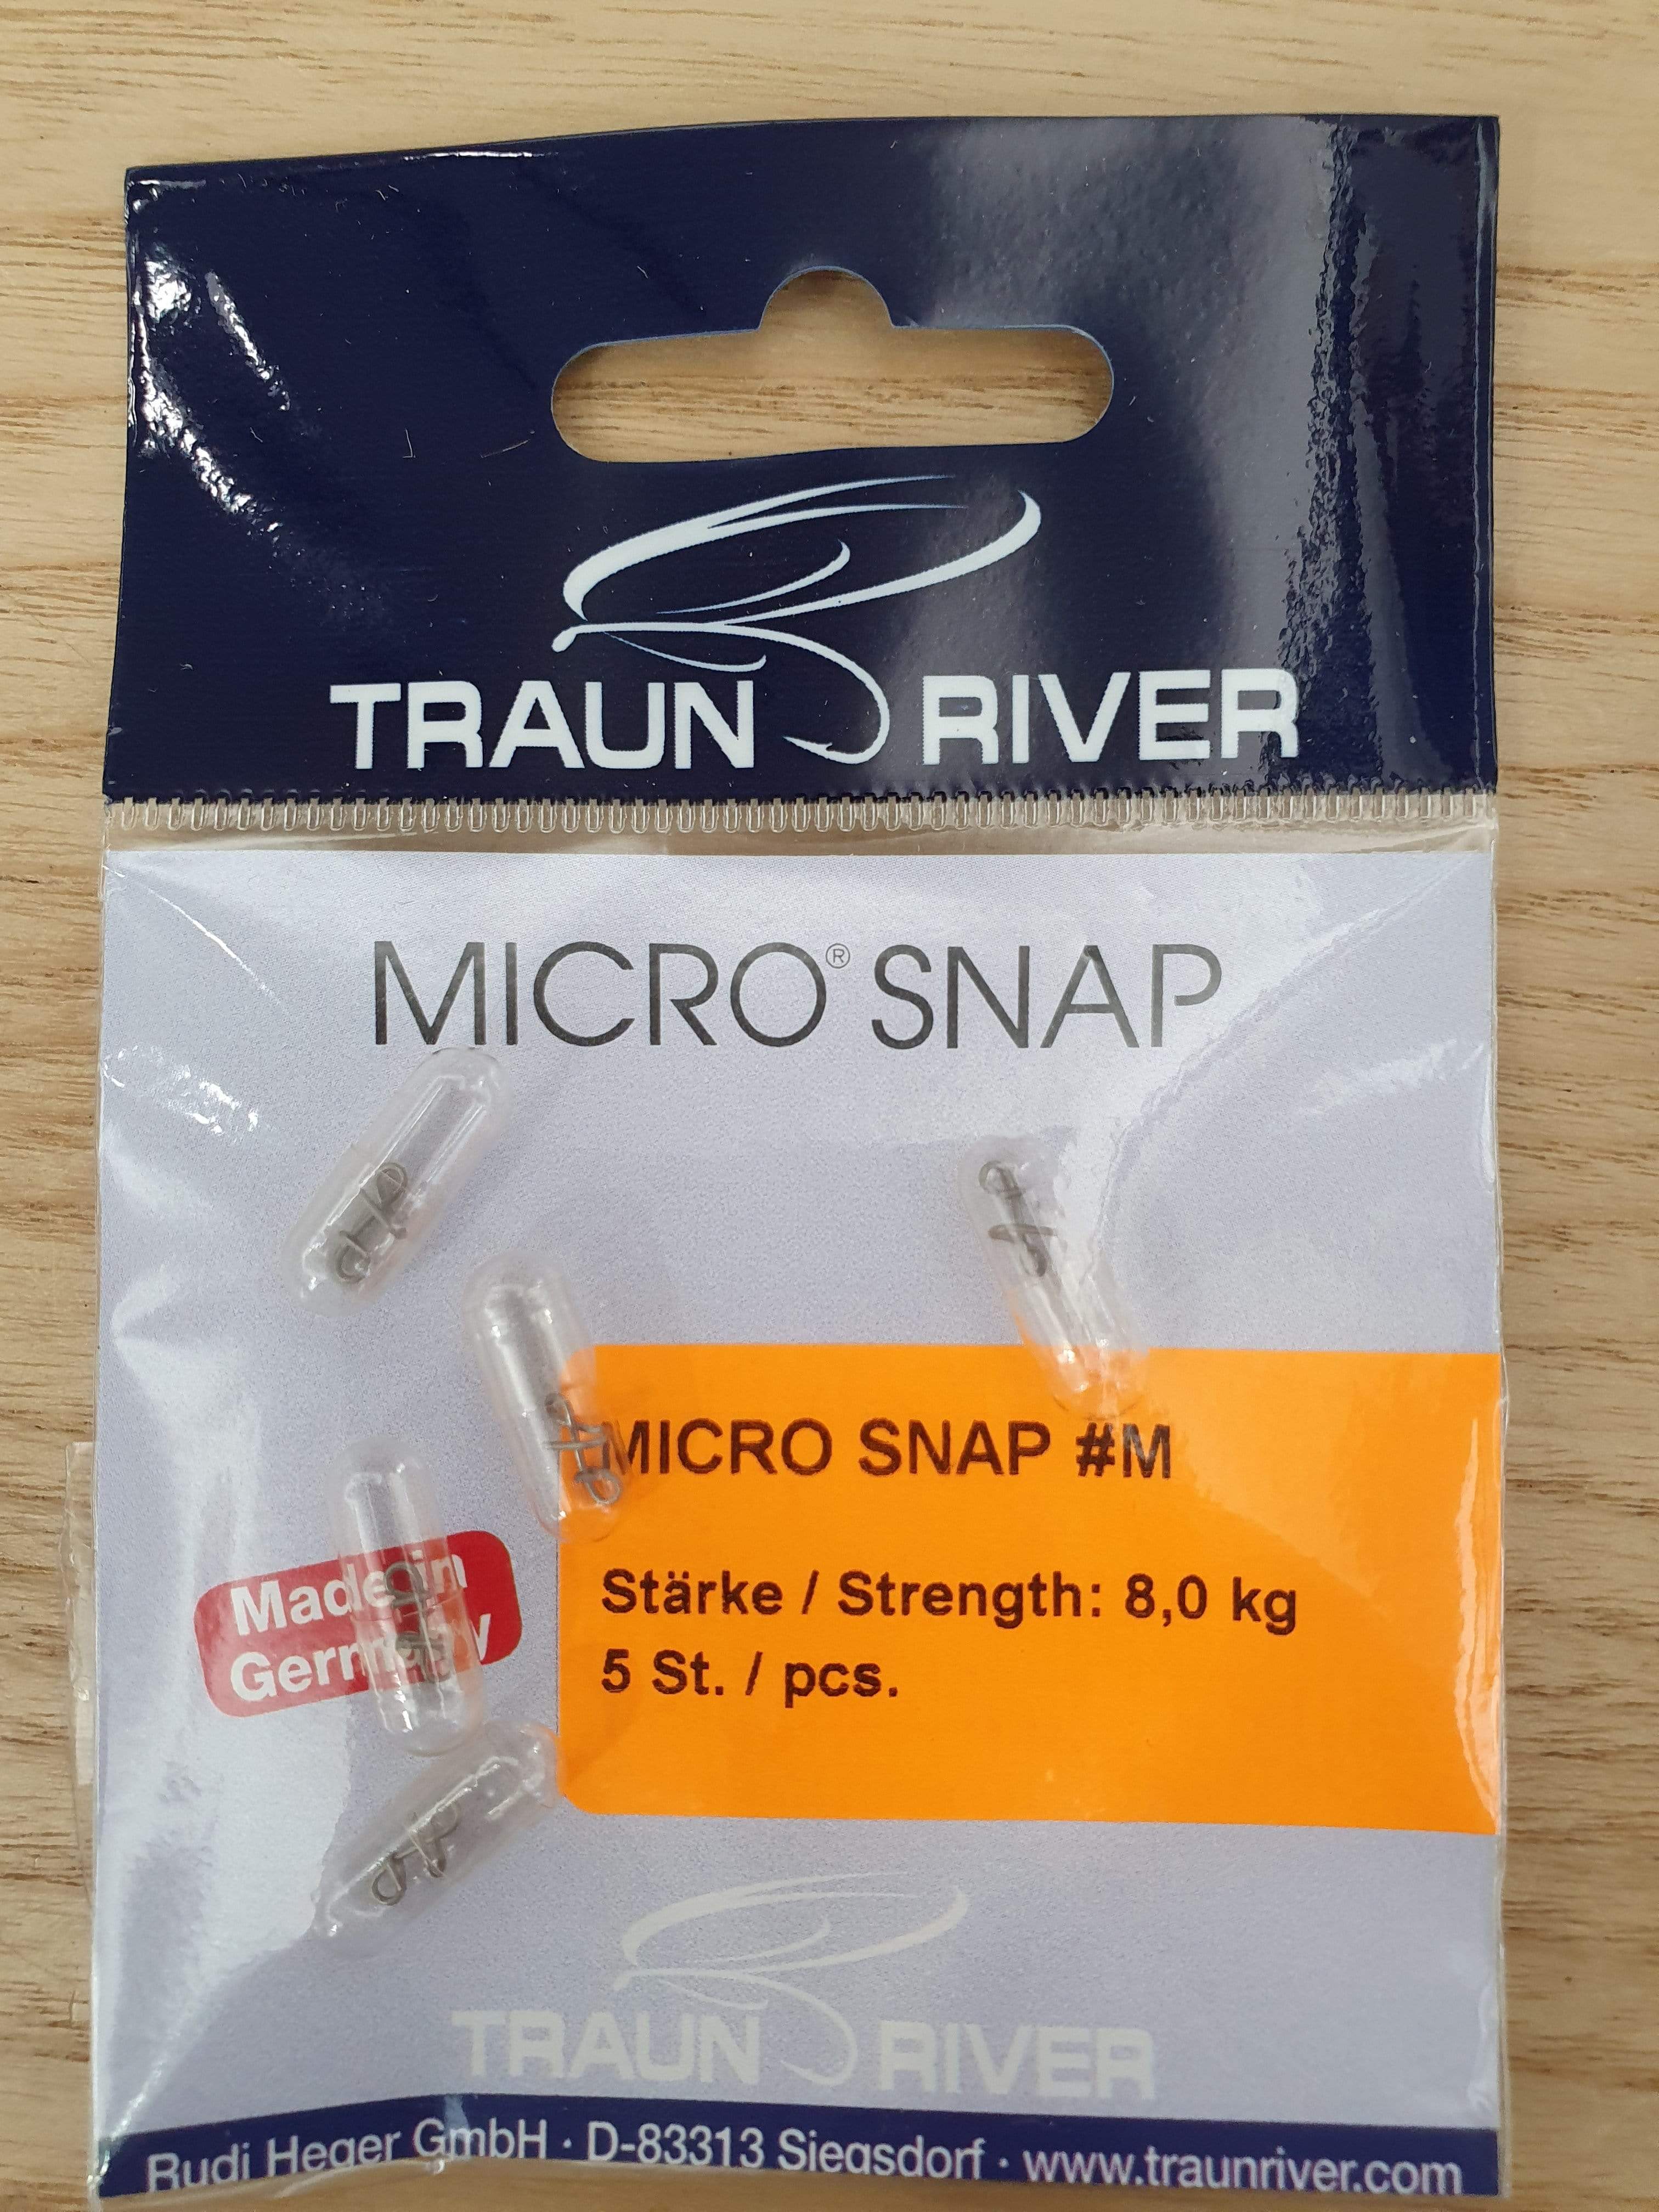 Traun River Micro Snap Micro Snap M (8kg) Traun River Micro Snaps